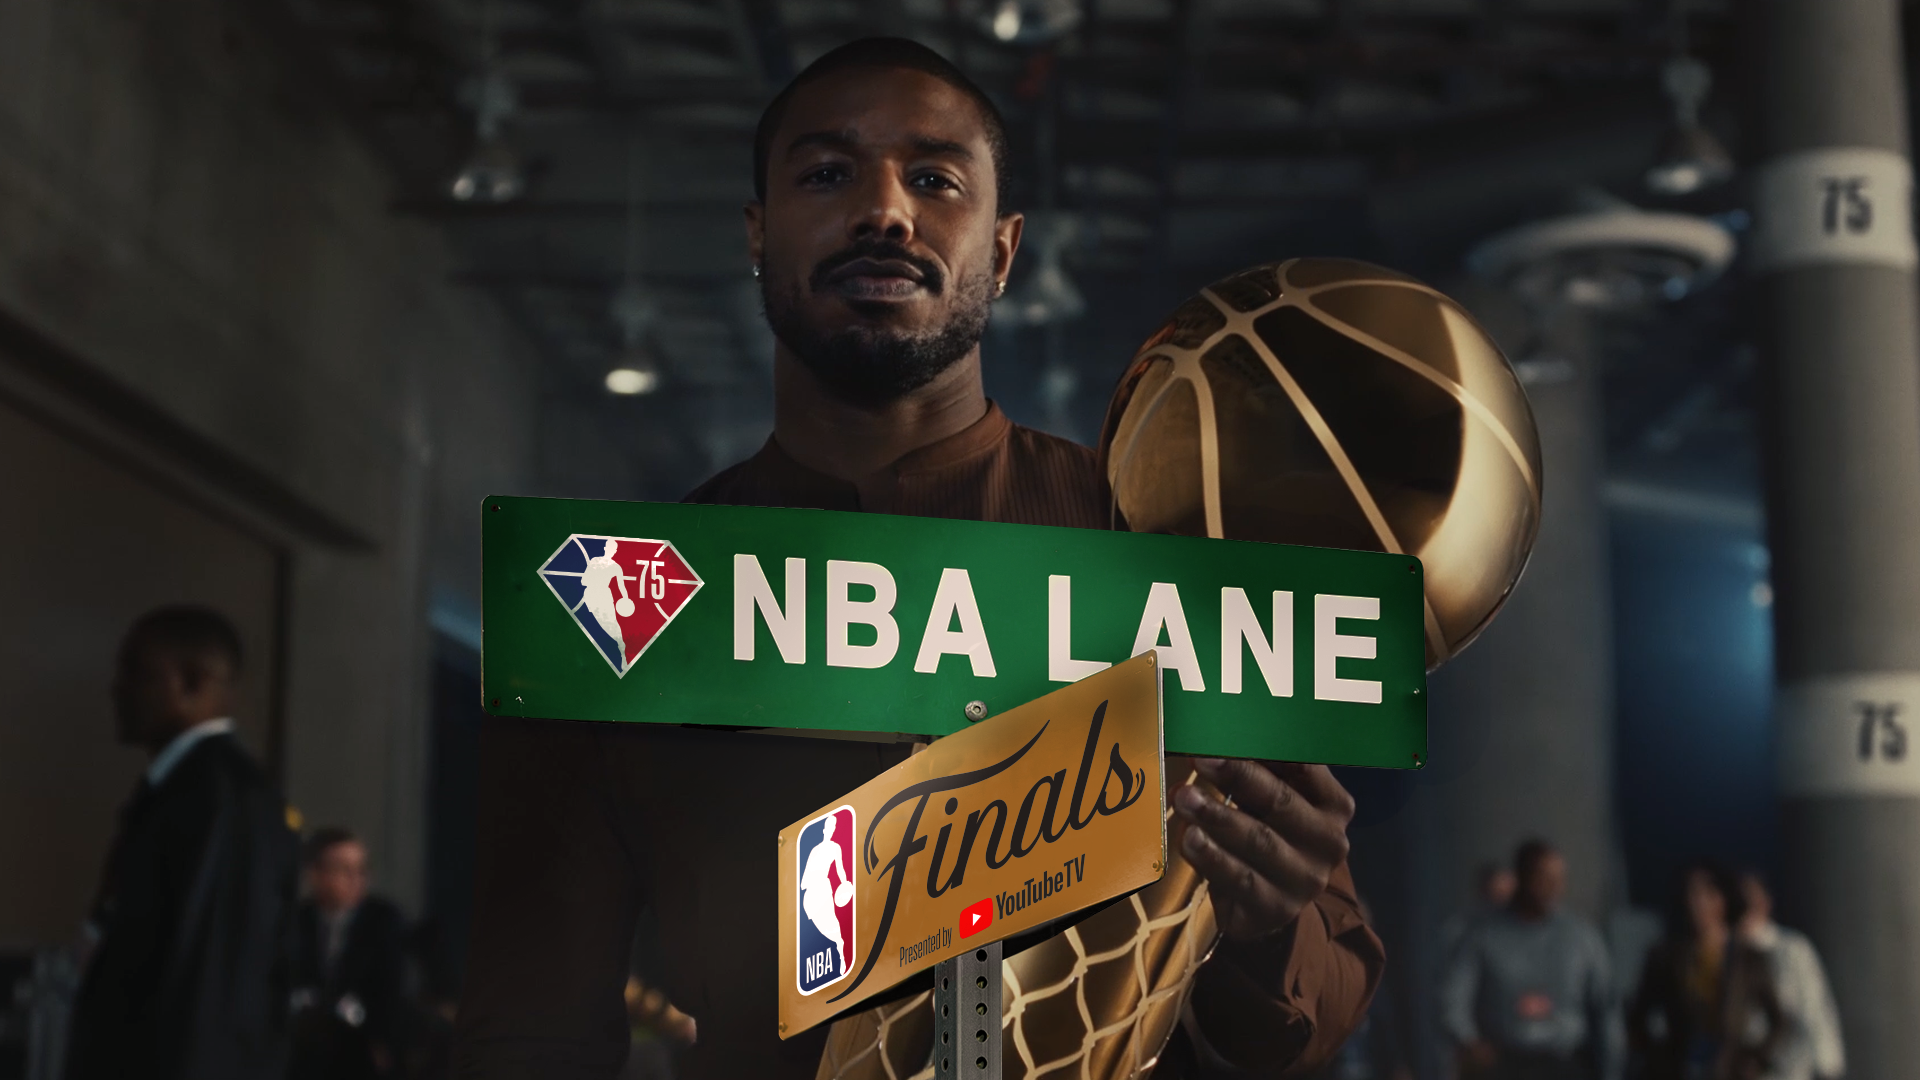 NBA Releases New 'NBA Lane' Film Called 